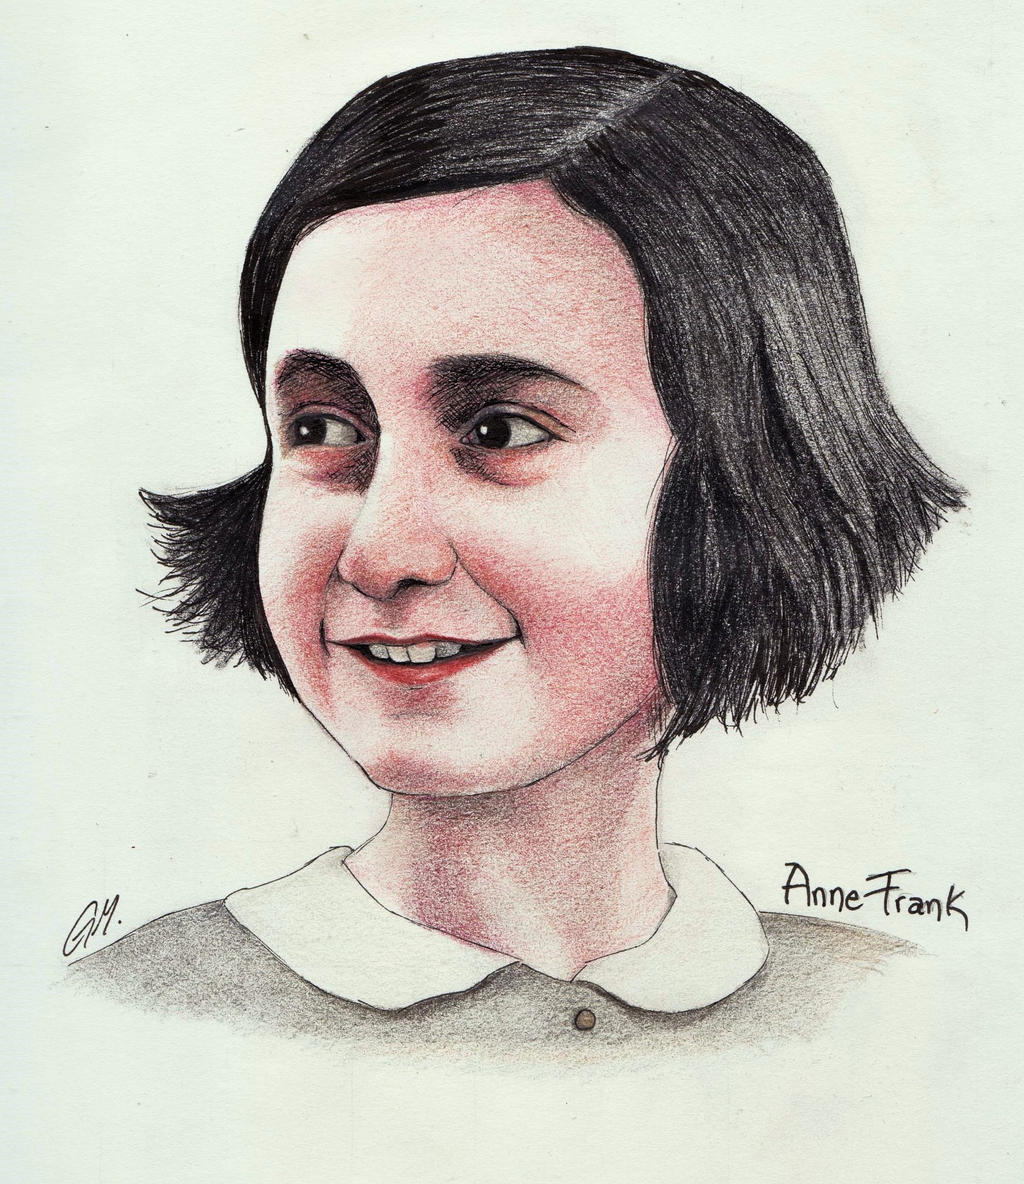 Anne Frank by nicolemr93 on DeviantArt